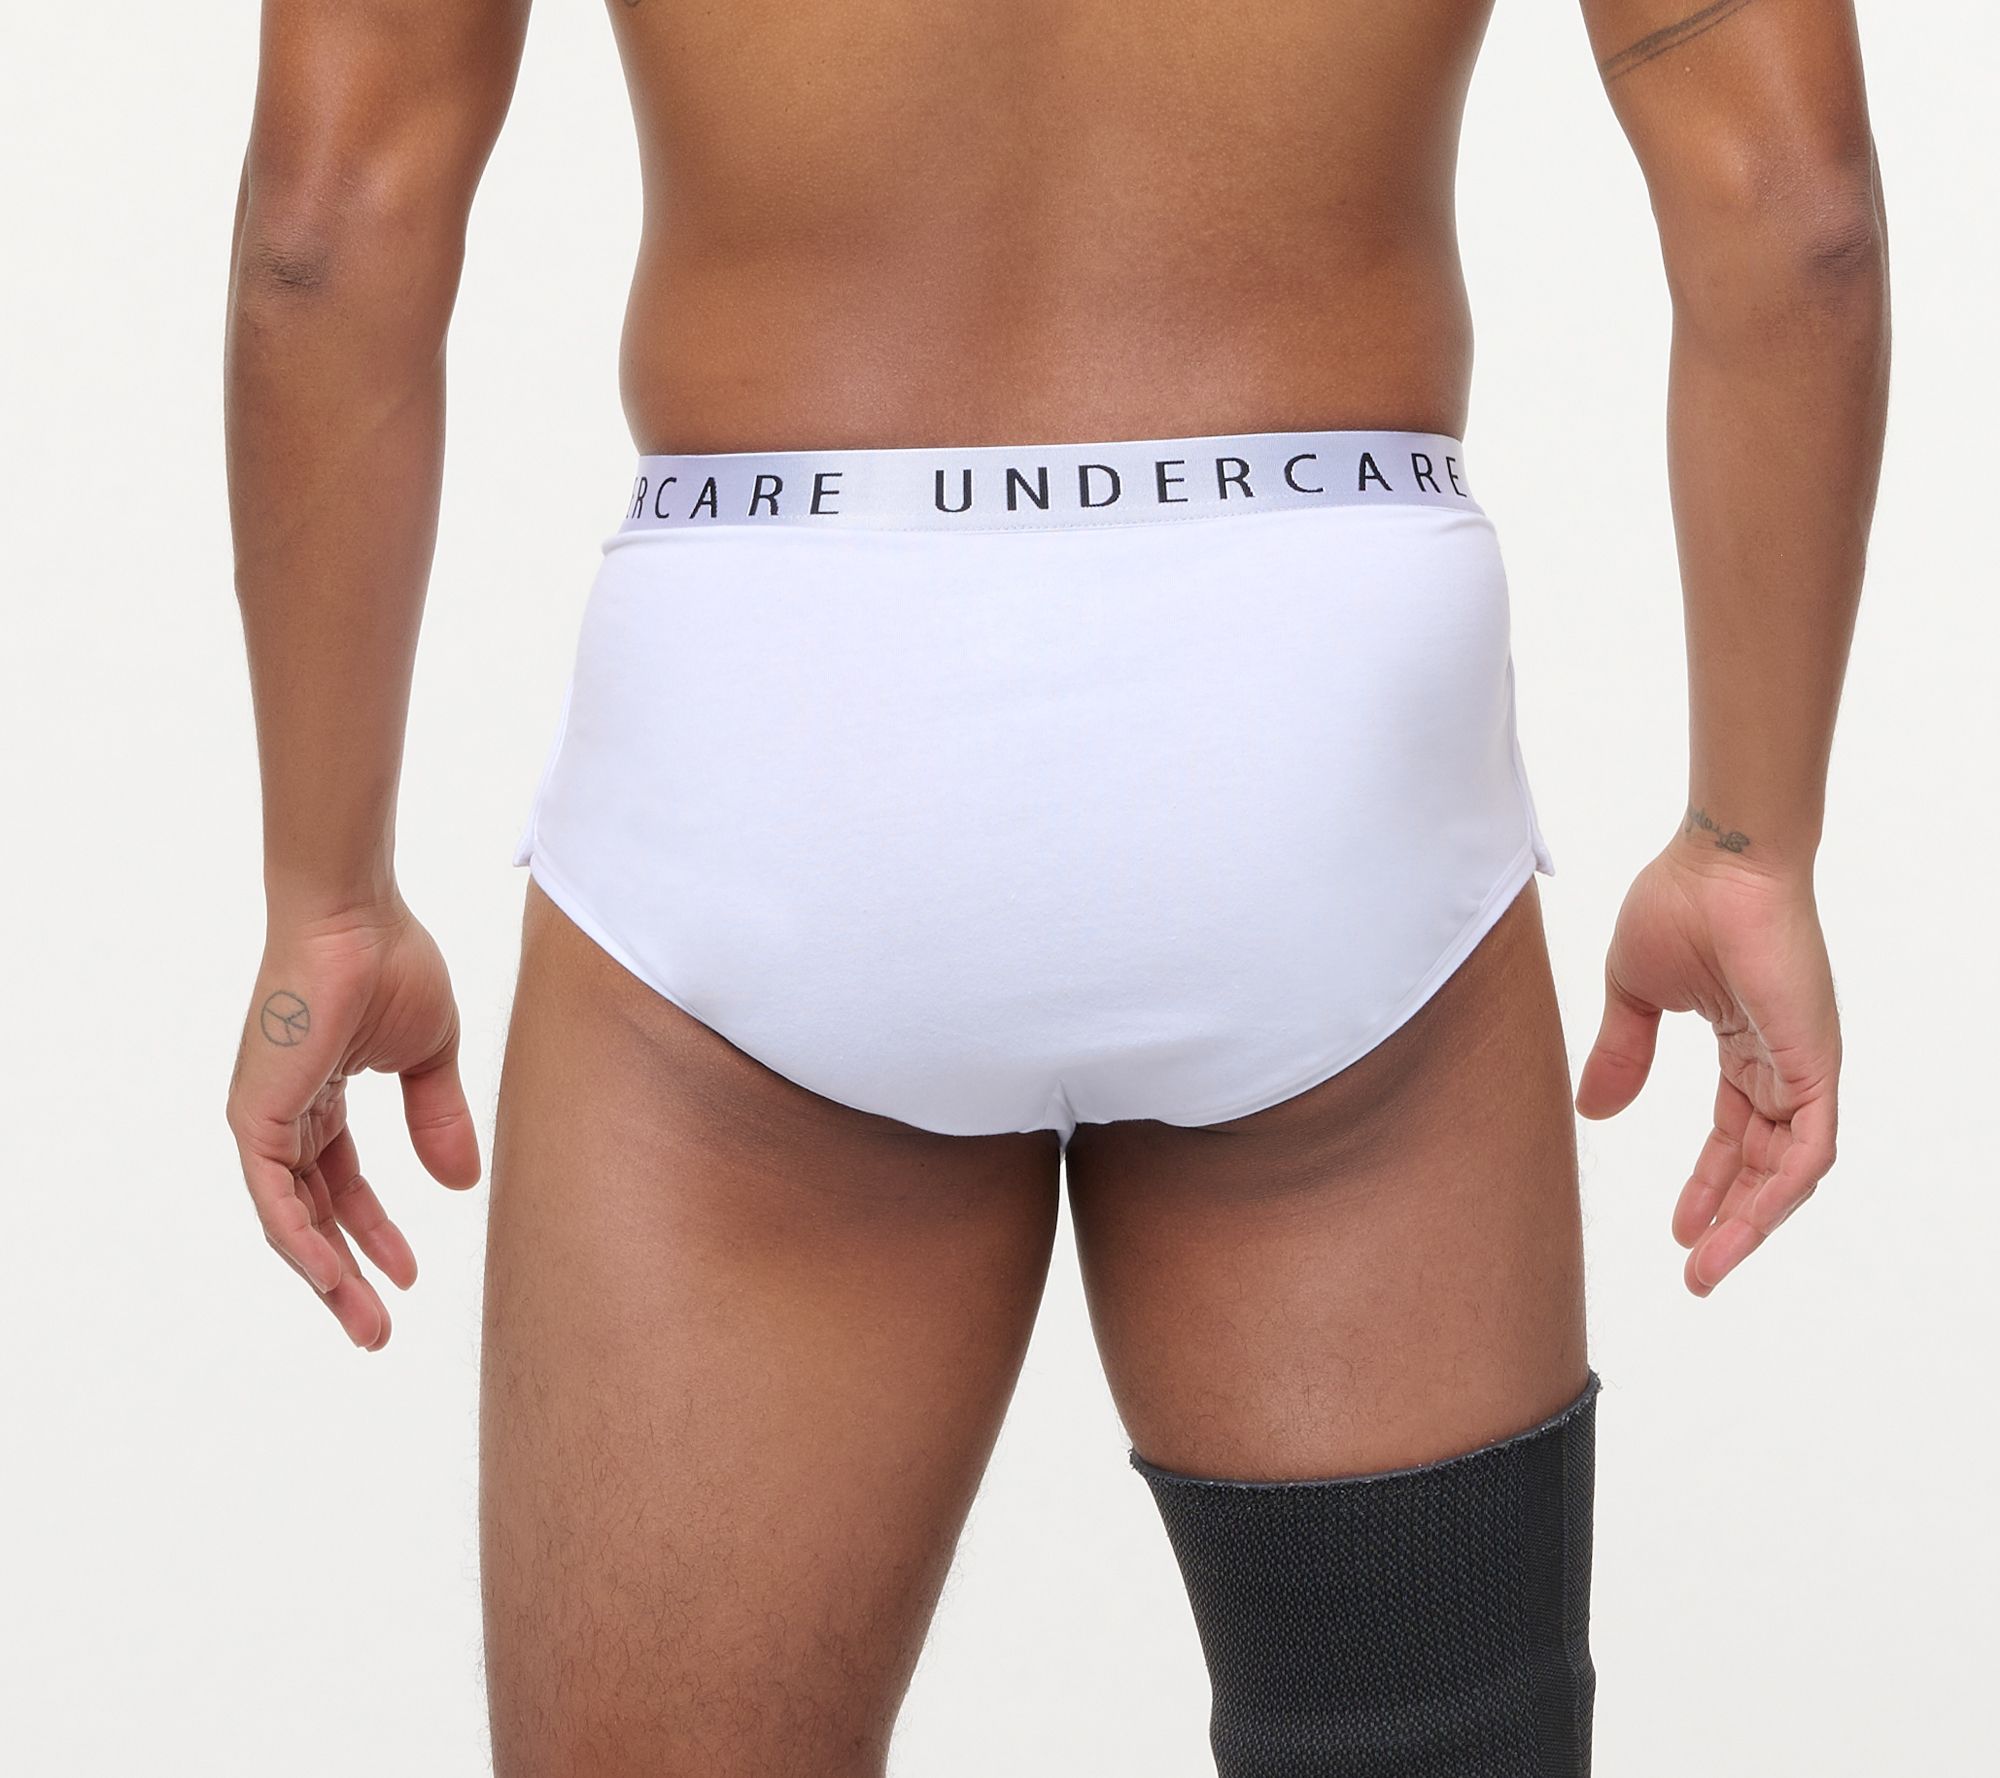 Dream Brief - Men Underwear Brief - Men's Briefs - Men's Printed